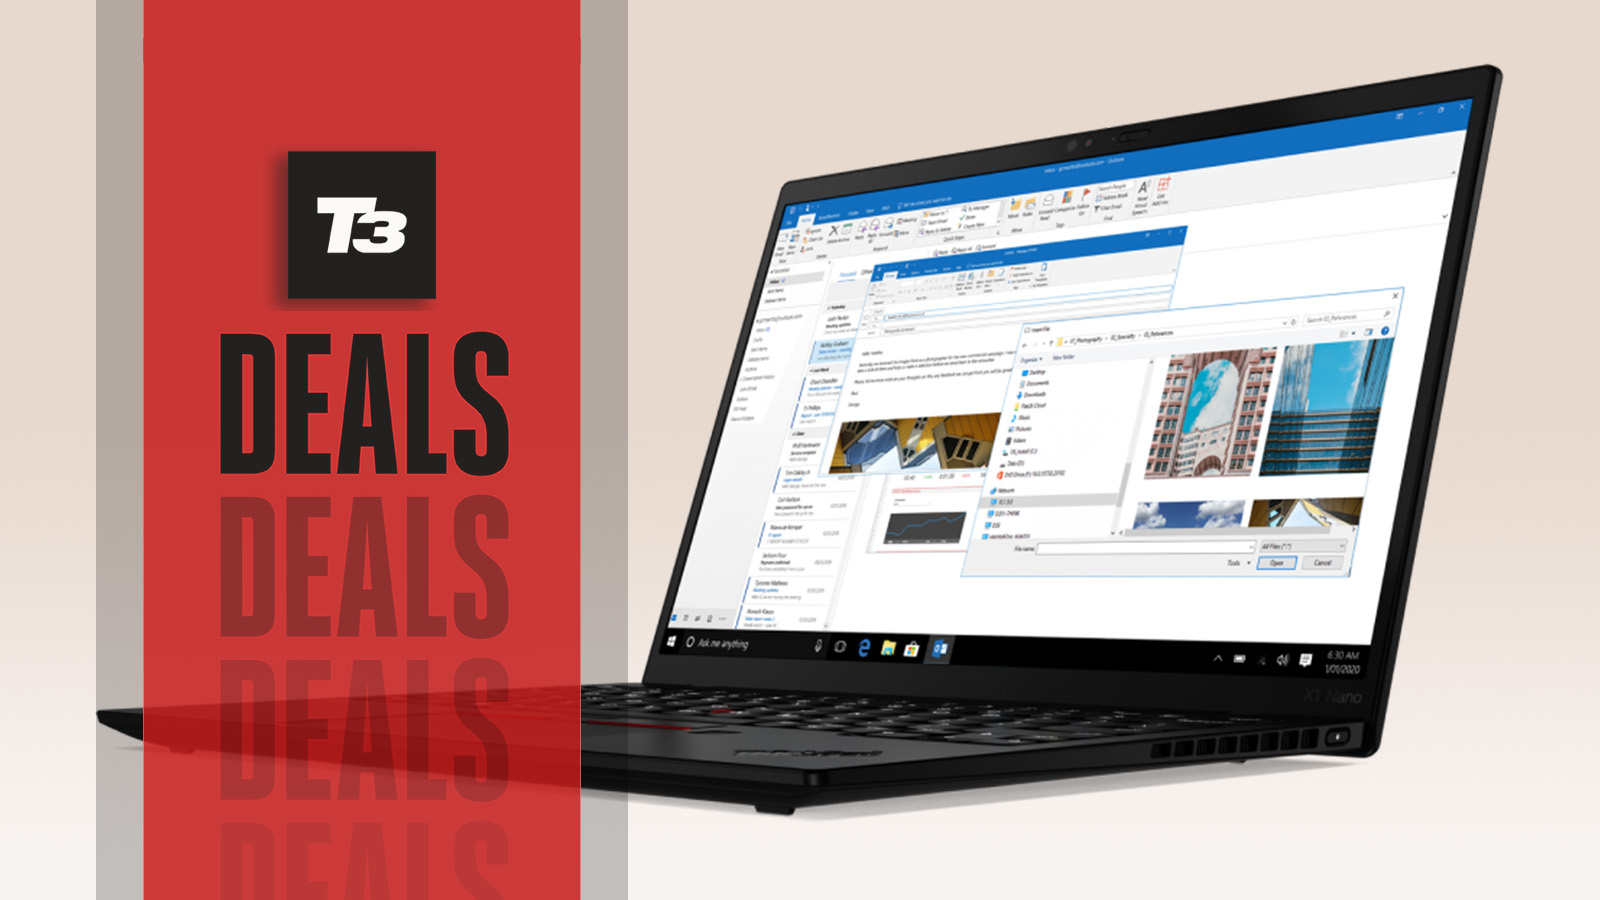 Memorial Day sales deals on Lenovo laptops T3